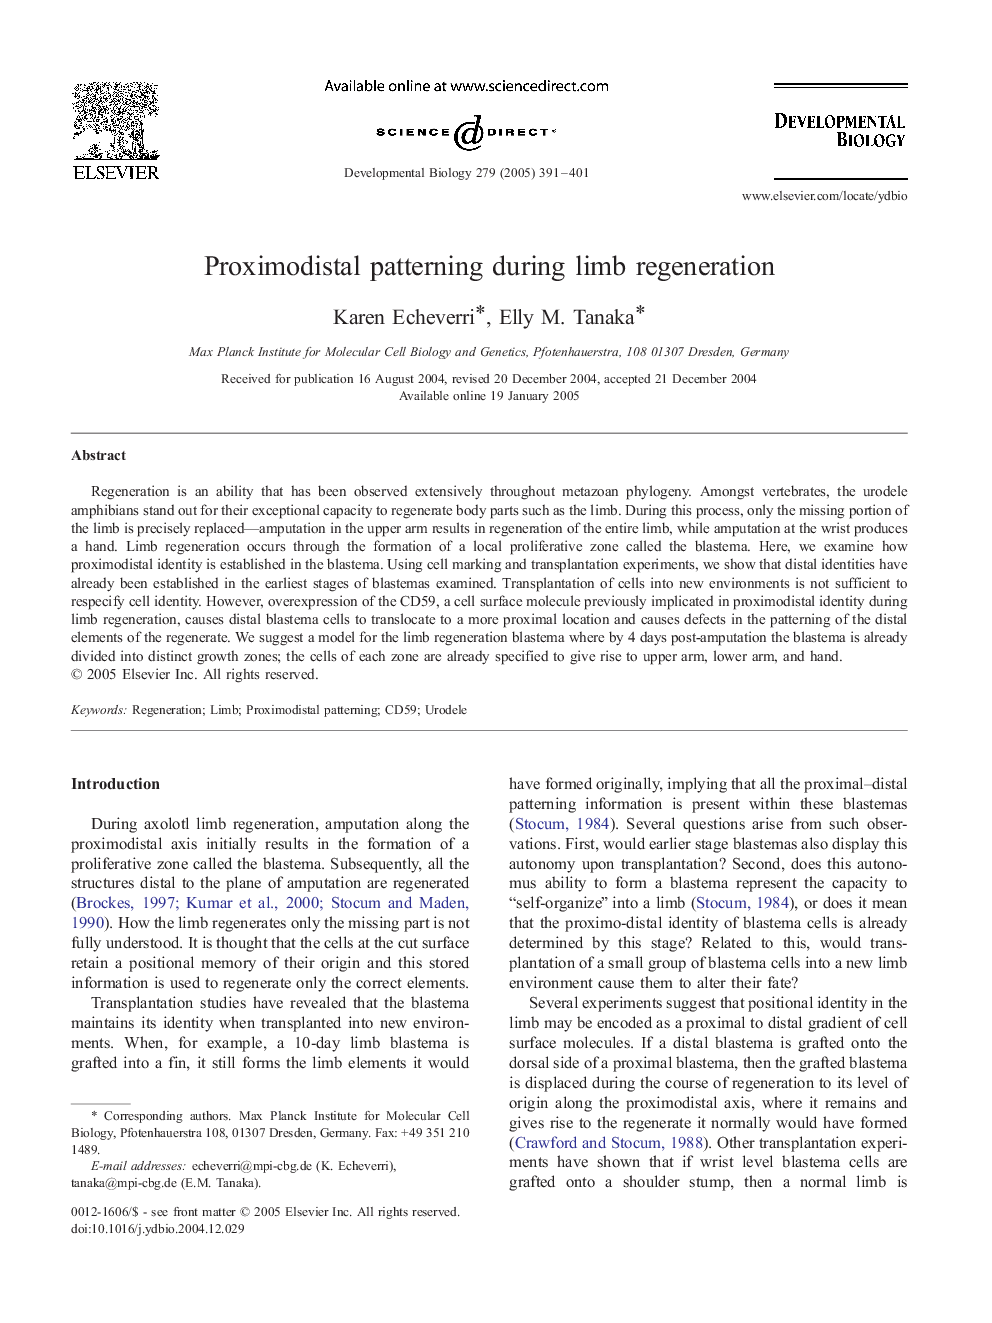 Proximodistal patterning during limb regeneration